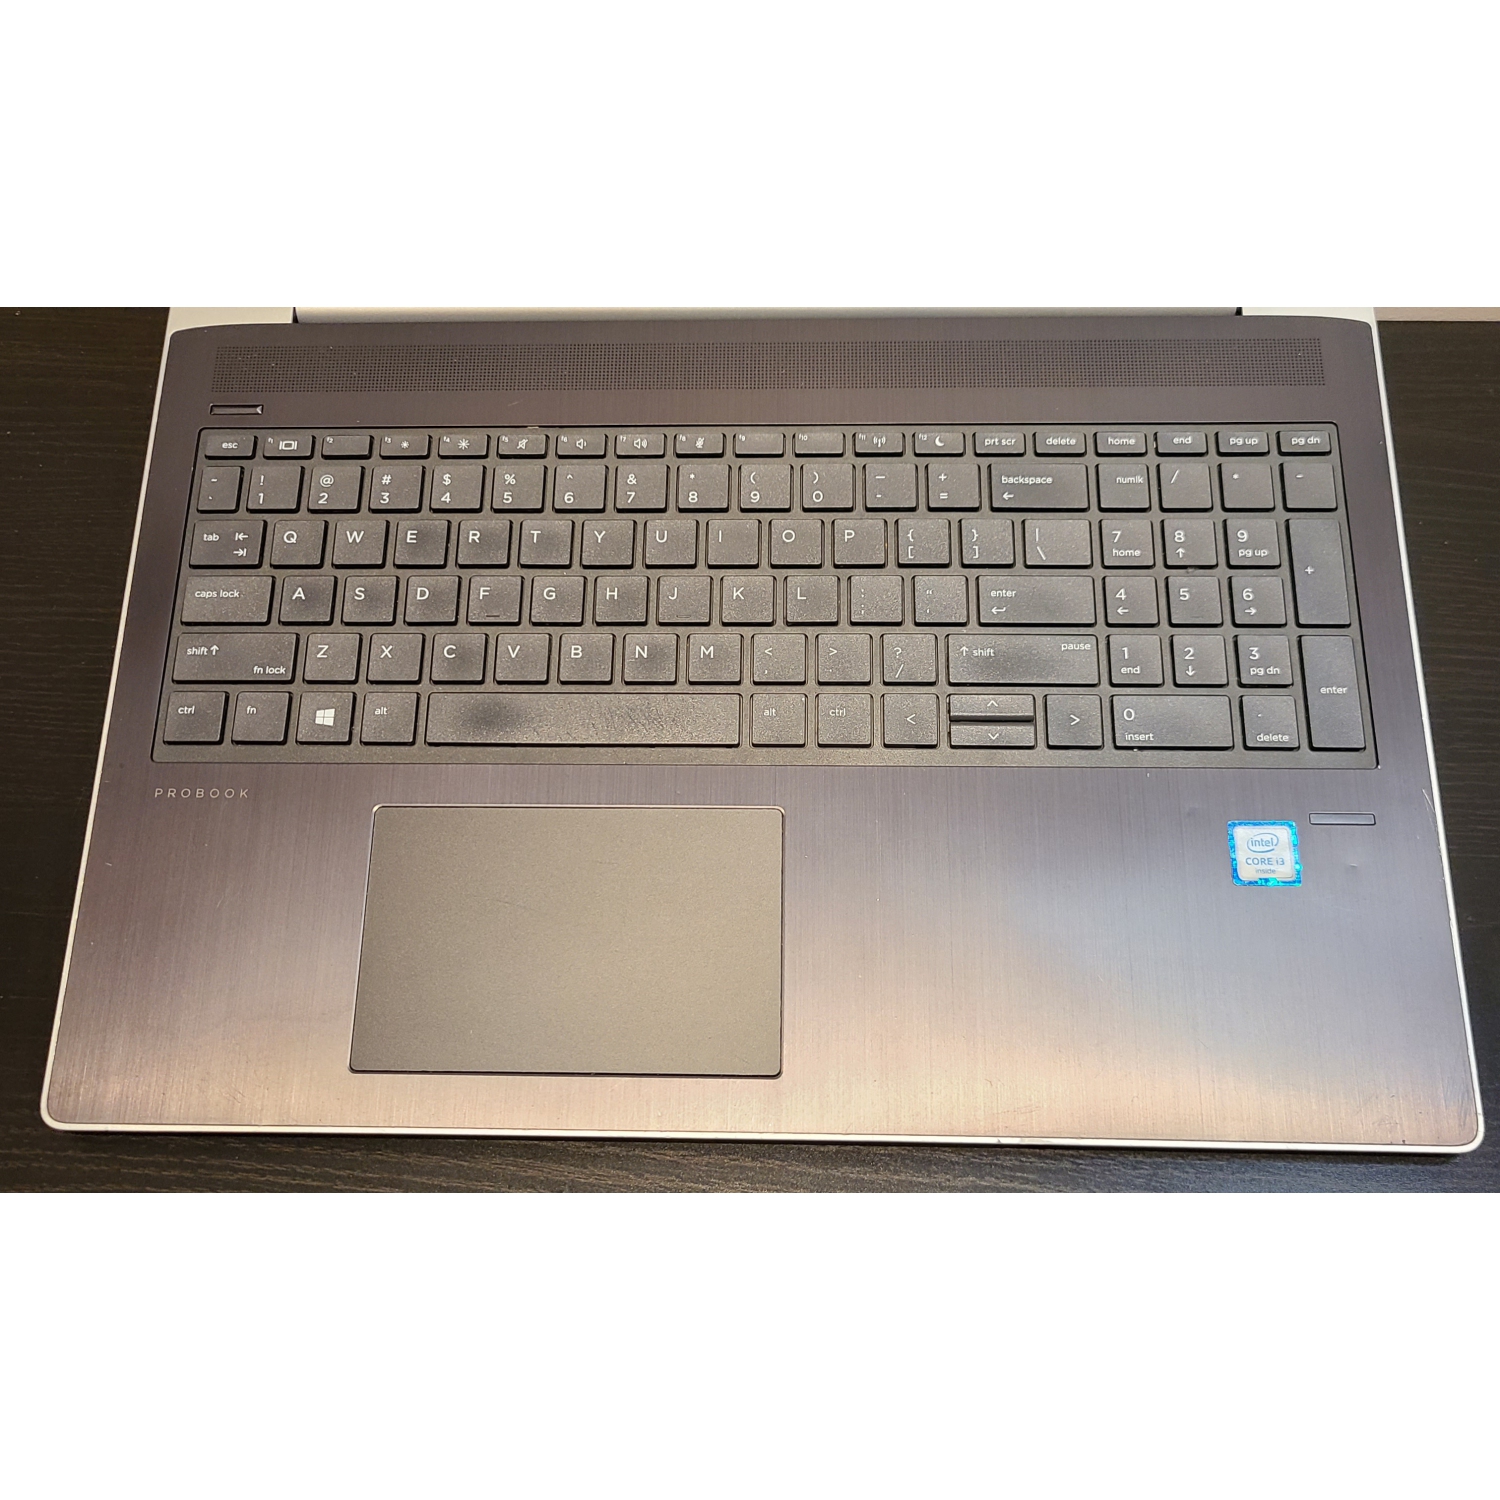 Refurbished (Good) - HP ProBook 450 G5, RAM - 8.00GB, HDD - 500